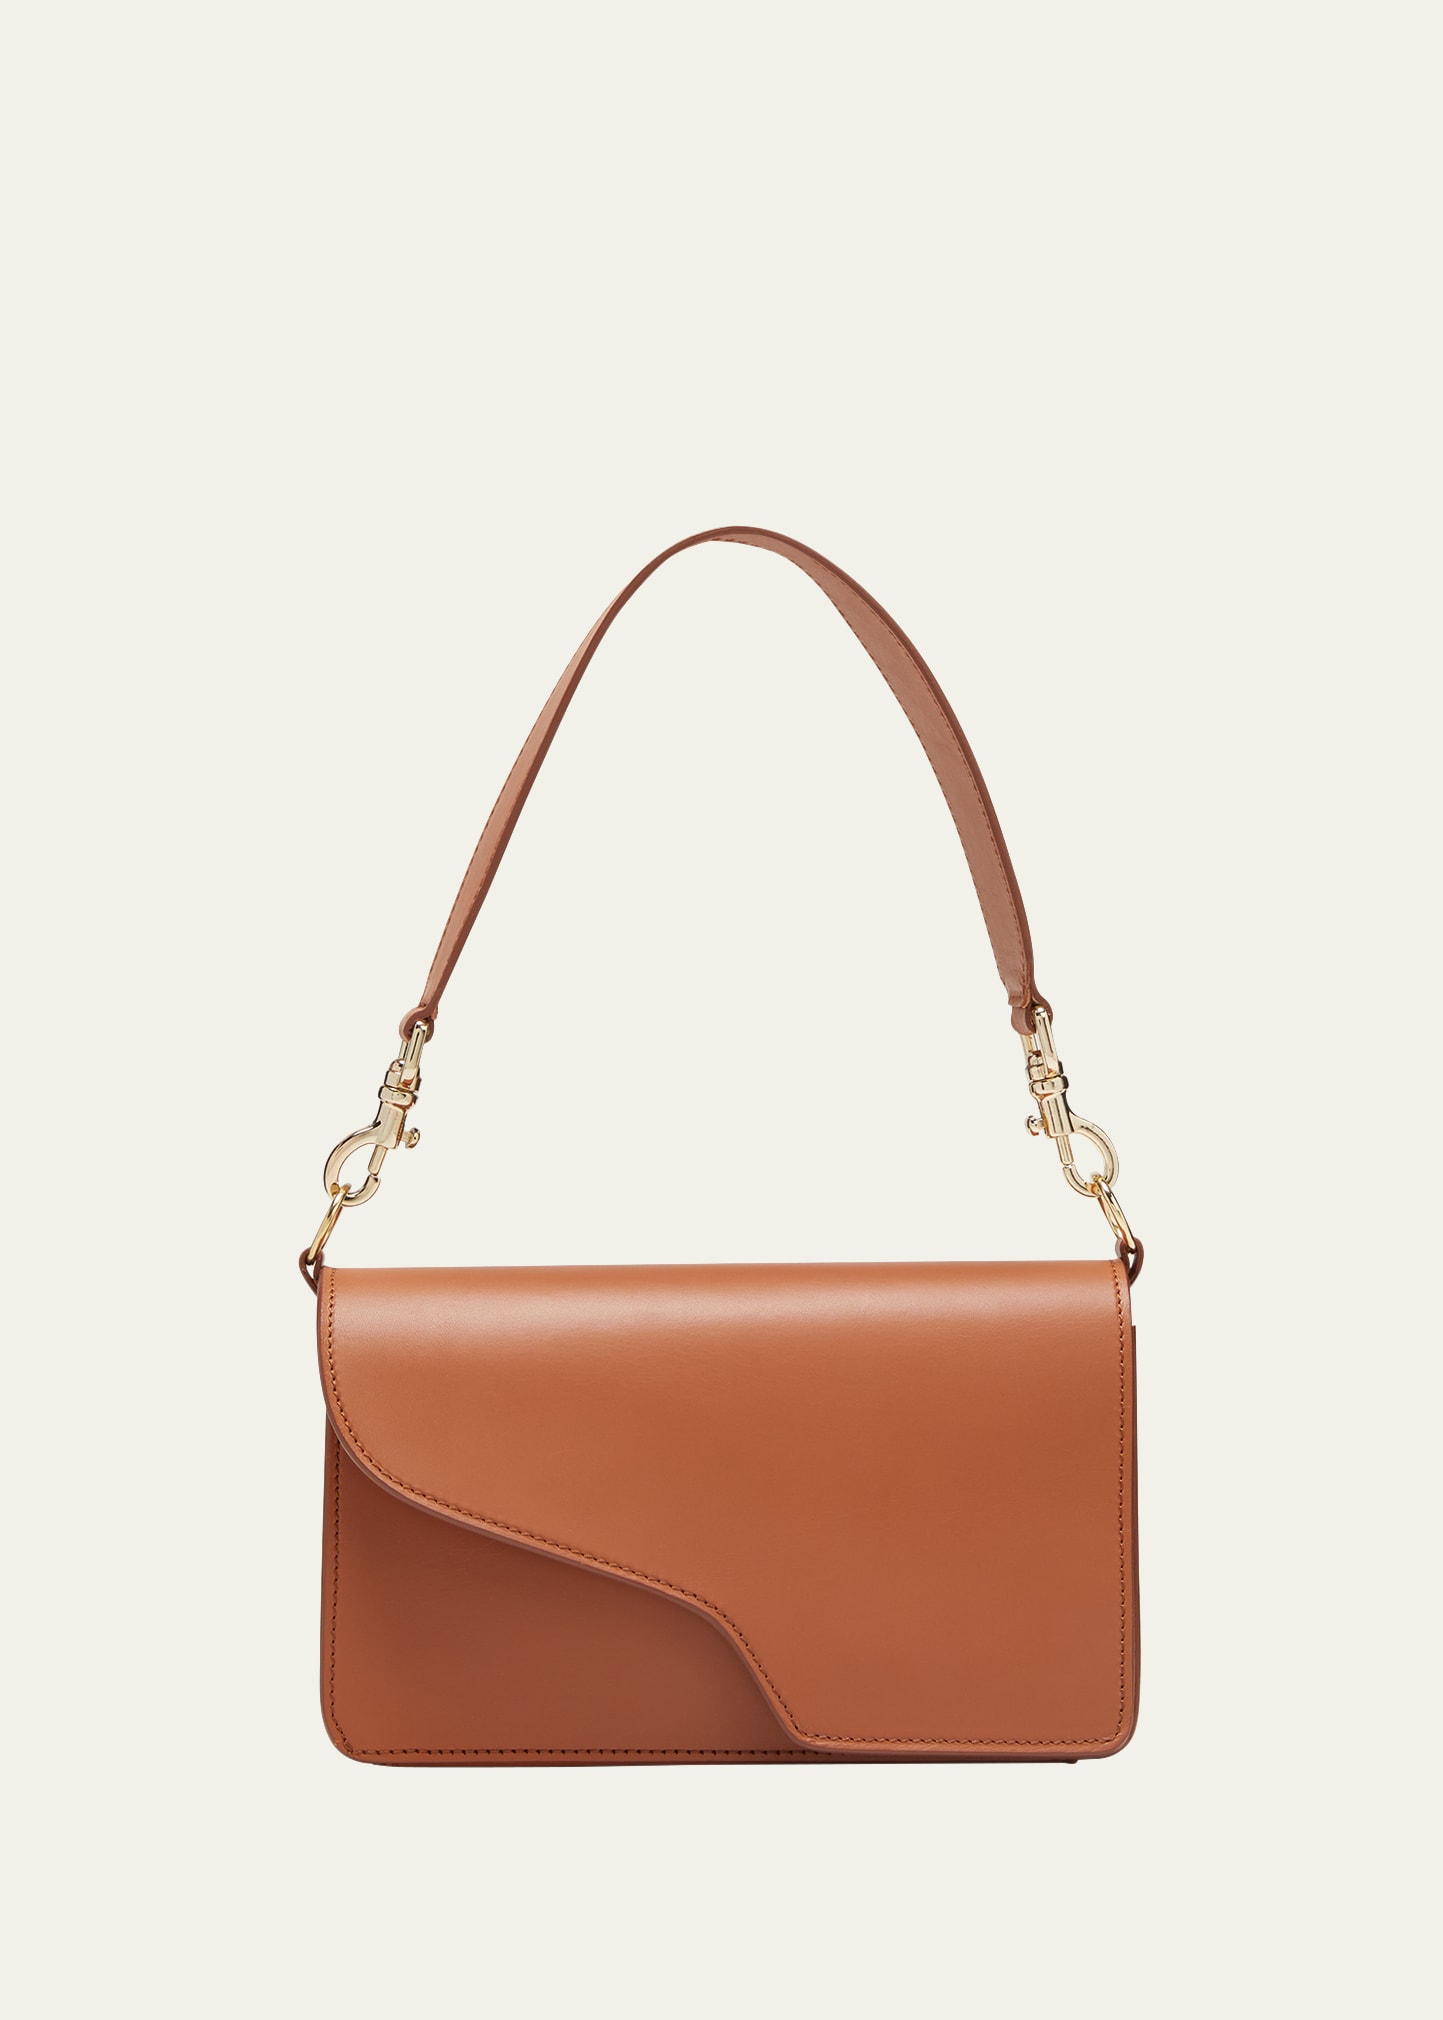 Assisi Vachetta Leather Shoulder Bag